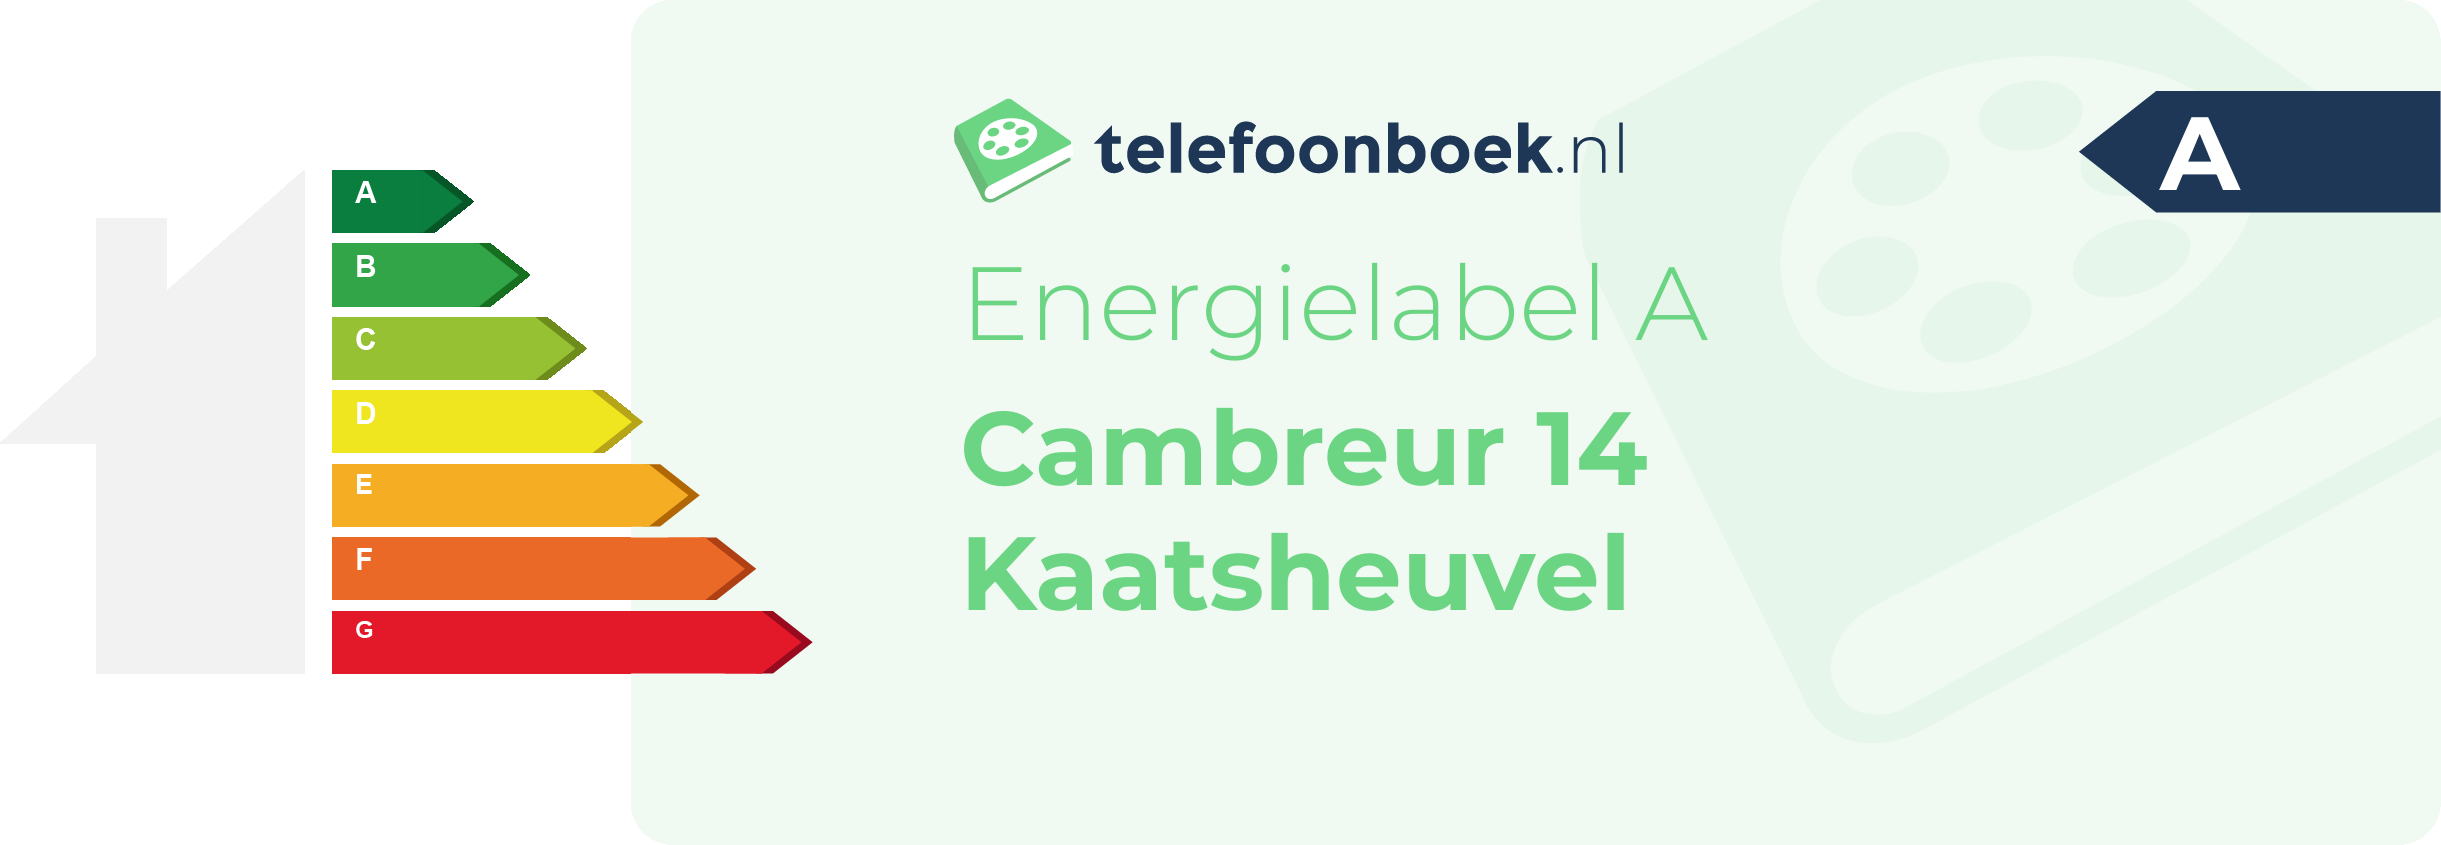 Energielabel Cambreur 14 Kaatsheuvel